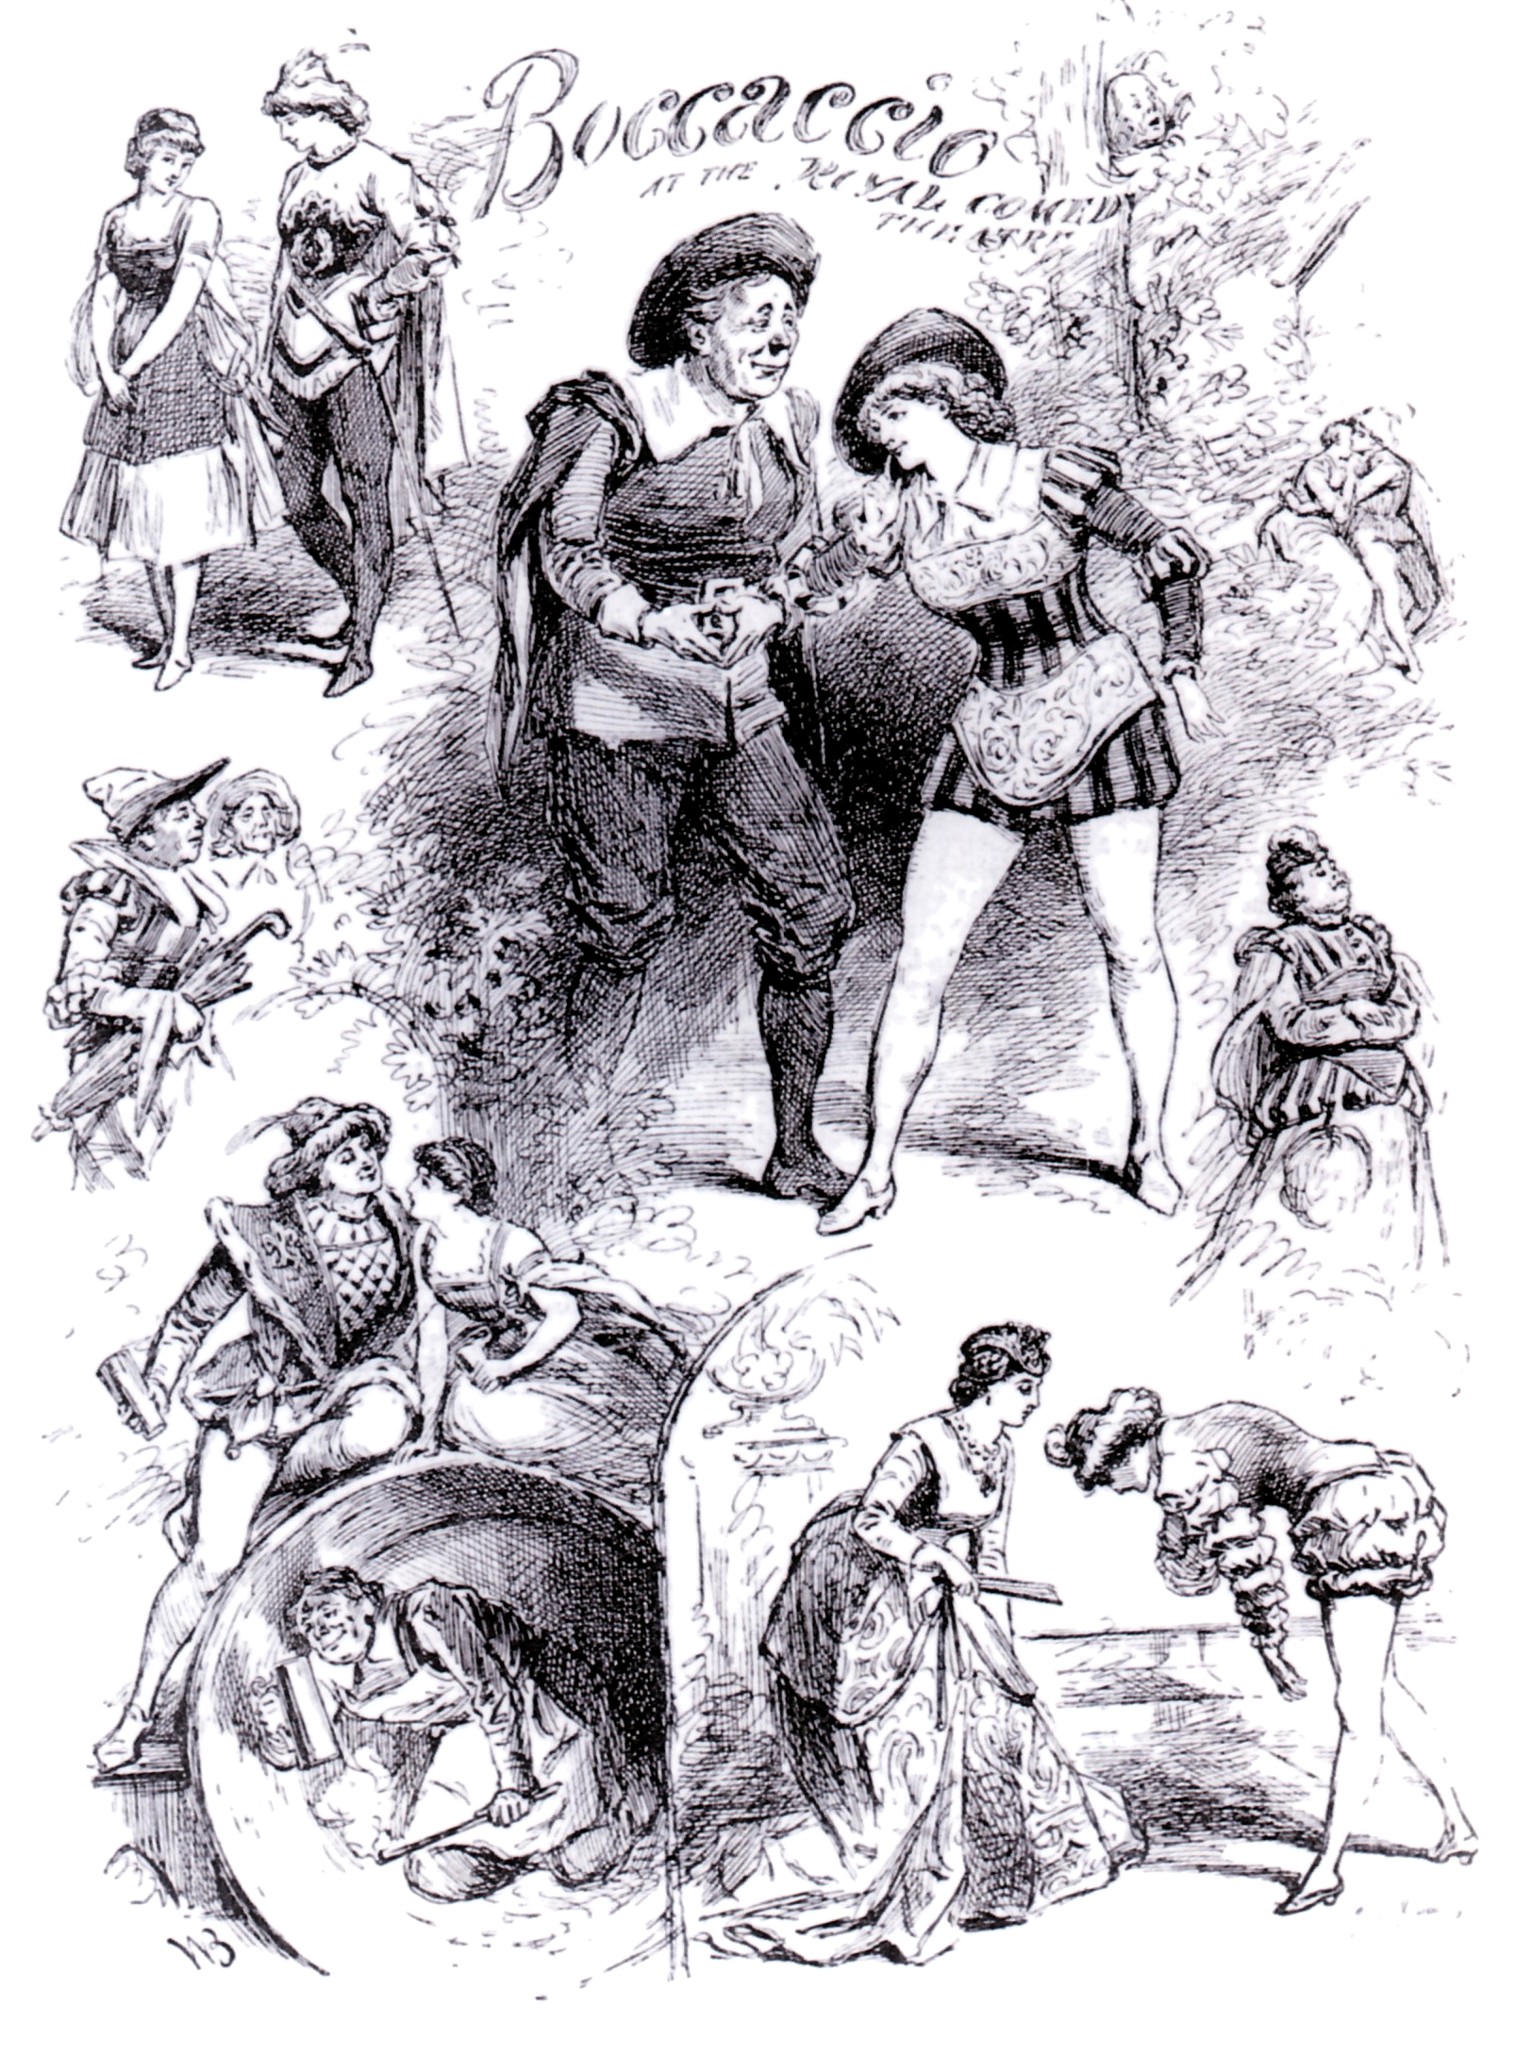 Poster for a "Boccaccio" production in London, 1882.